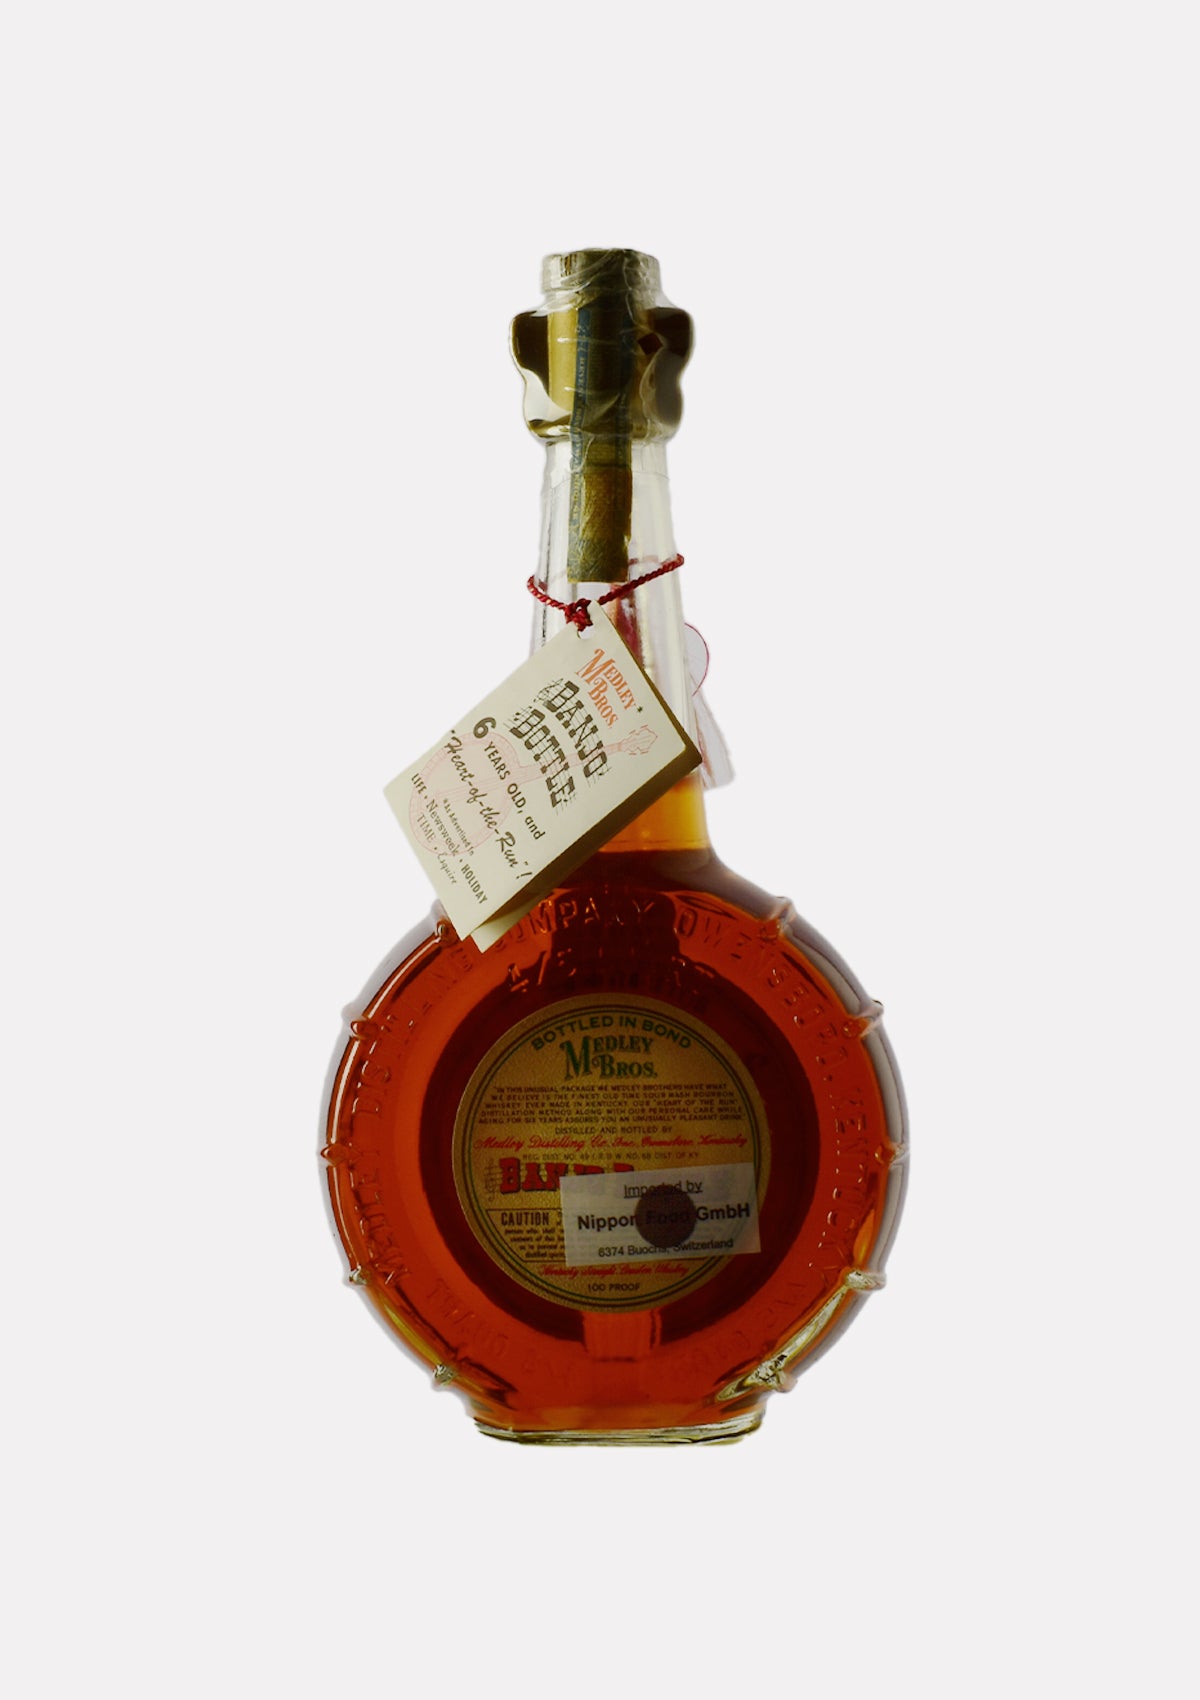 Medley Bros. Banjo Bottle Kentucky Straight Bourbon Whiskey 6 Jahre